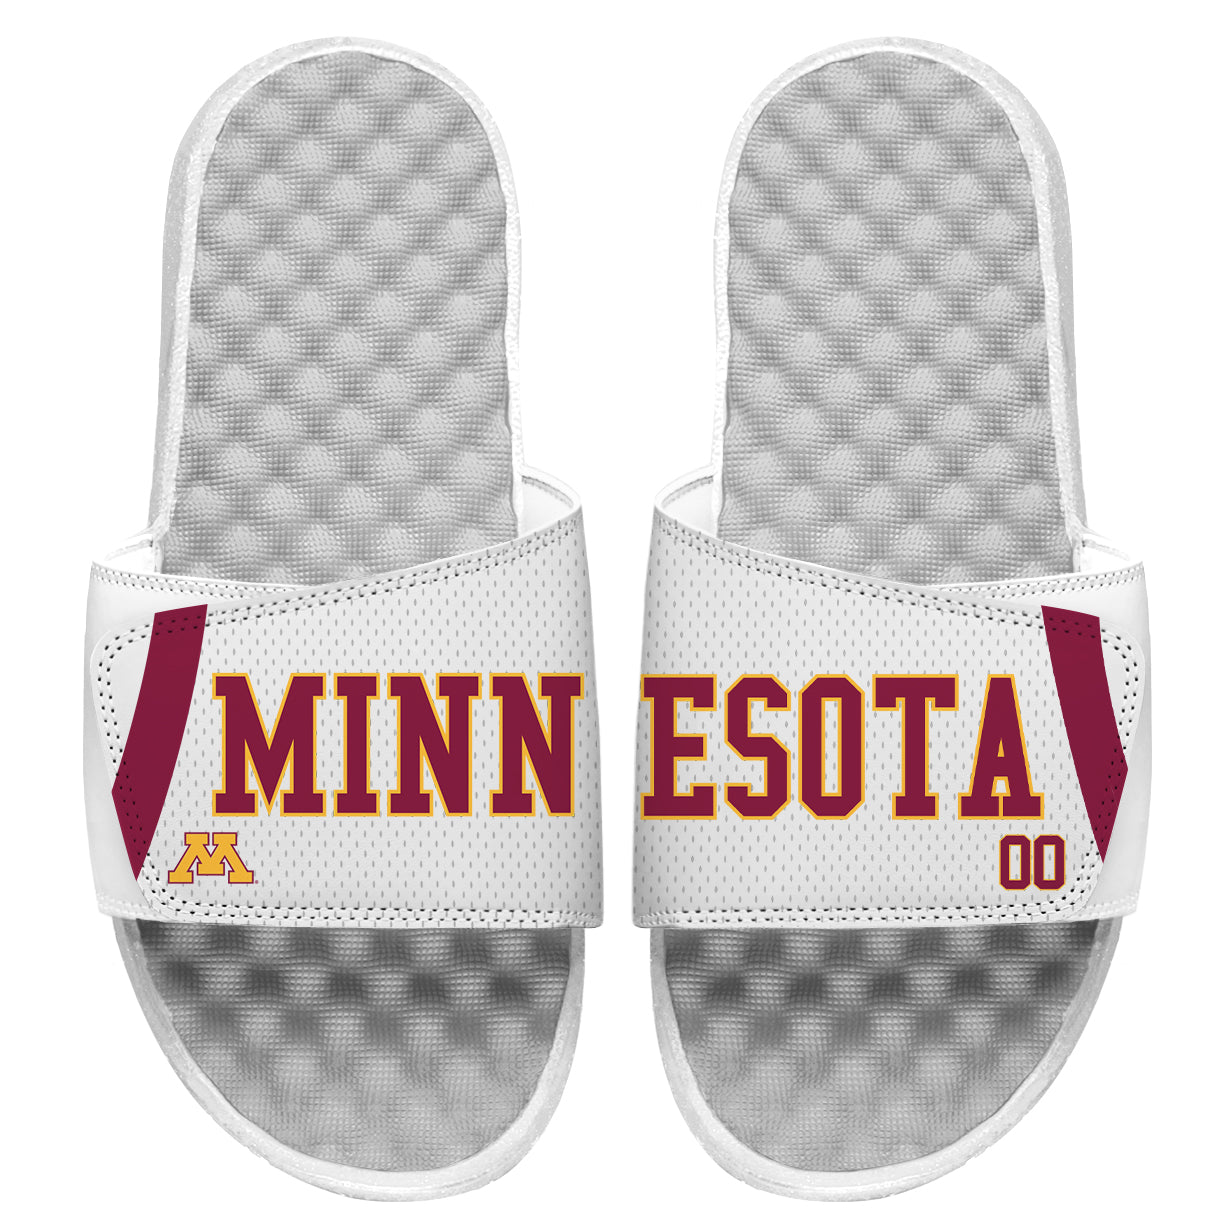 Minnesota Jersey Slides